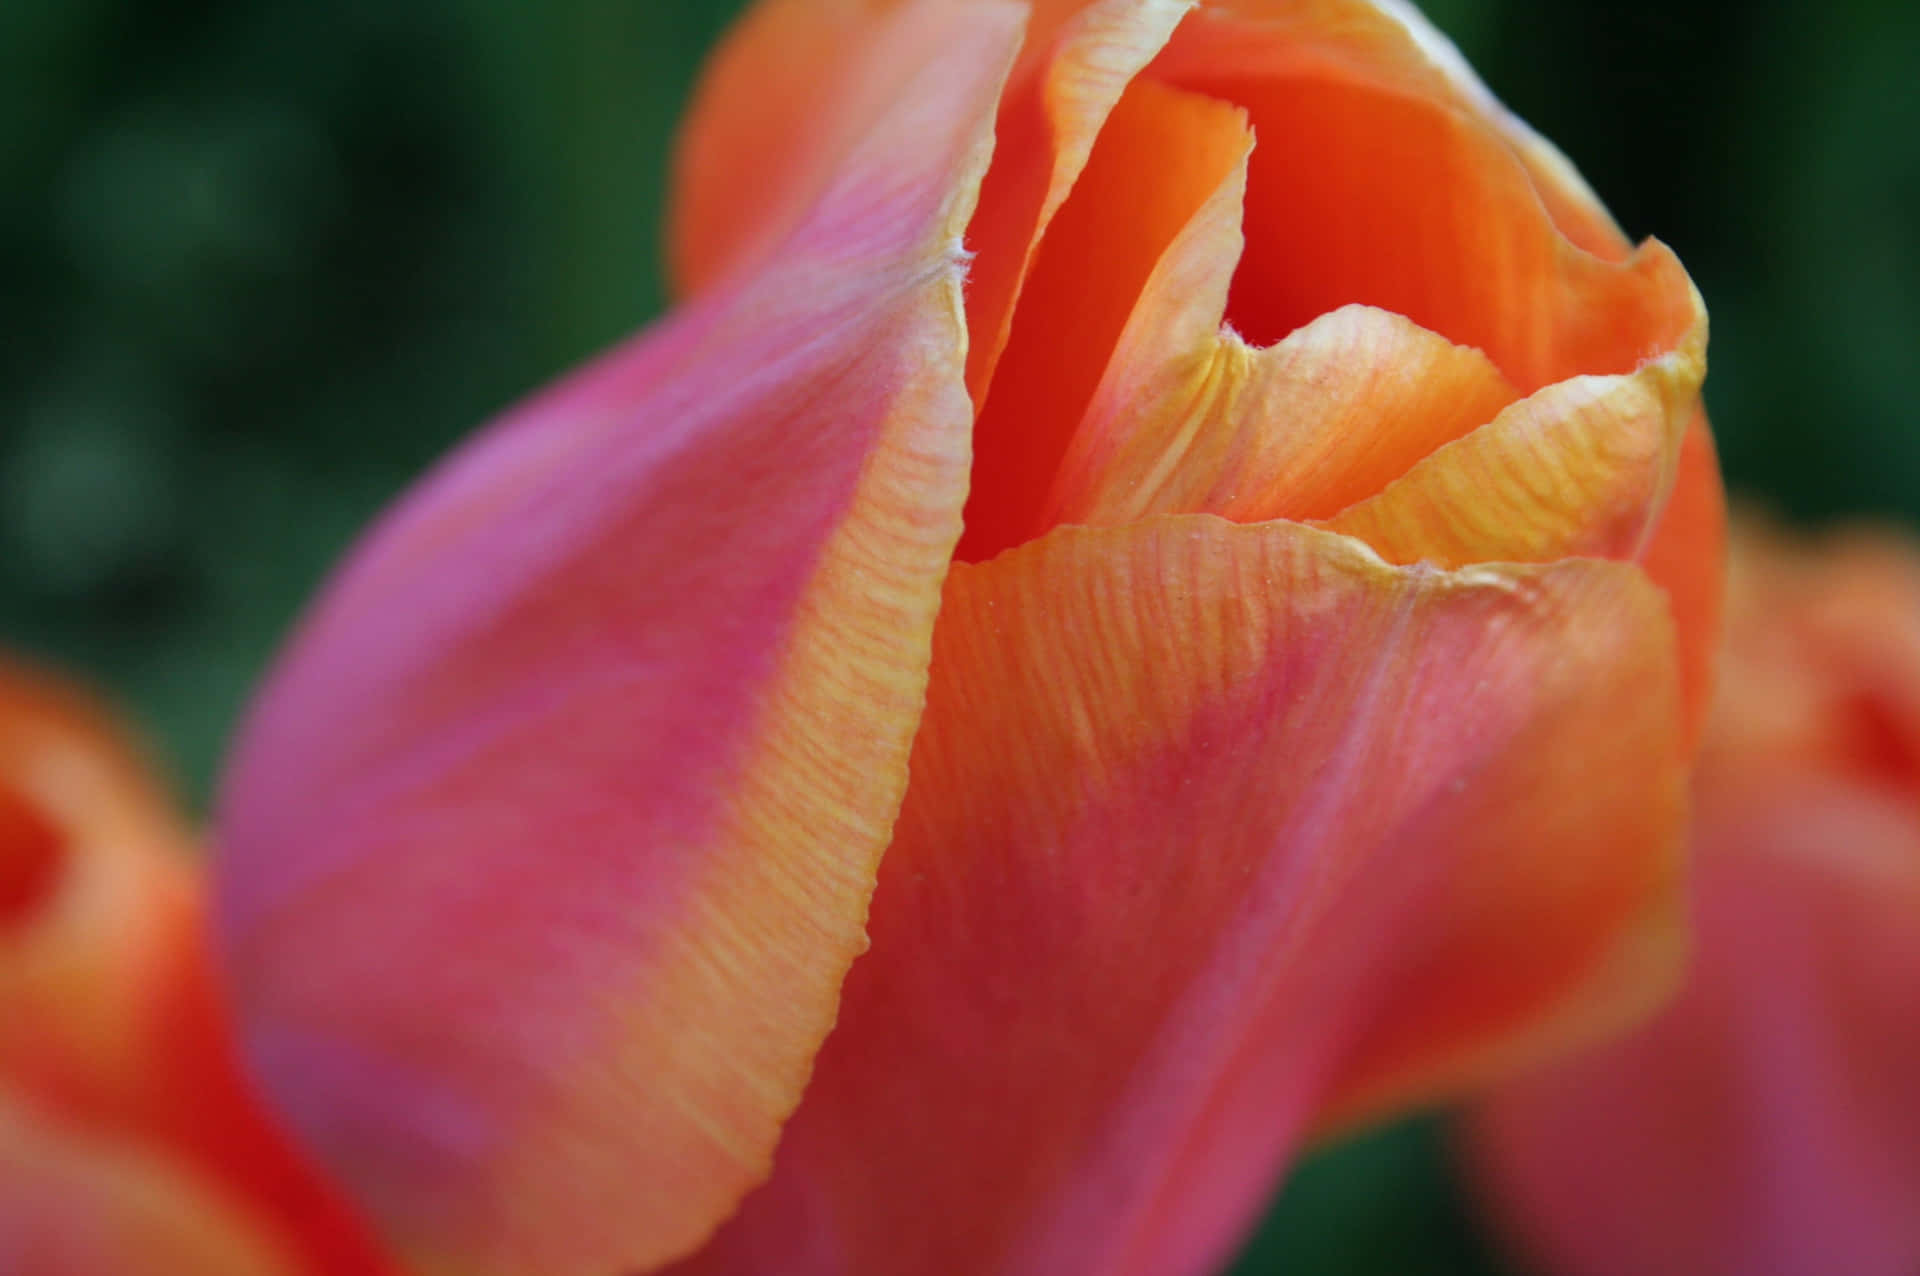 Vibrant Pink Orange Tulip Closeup.jpg Wallpaper